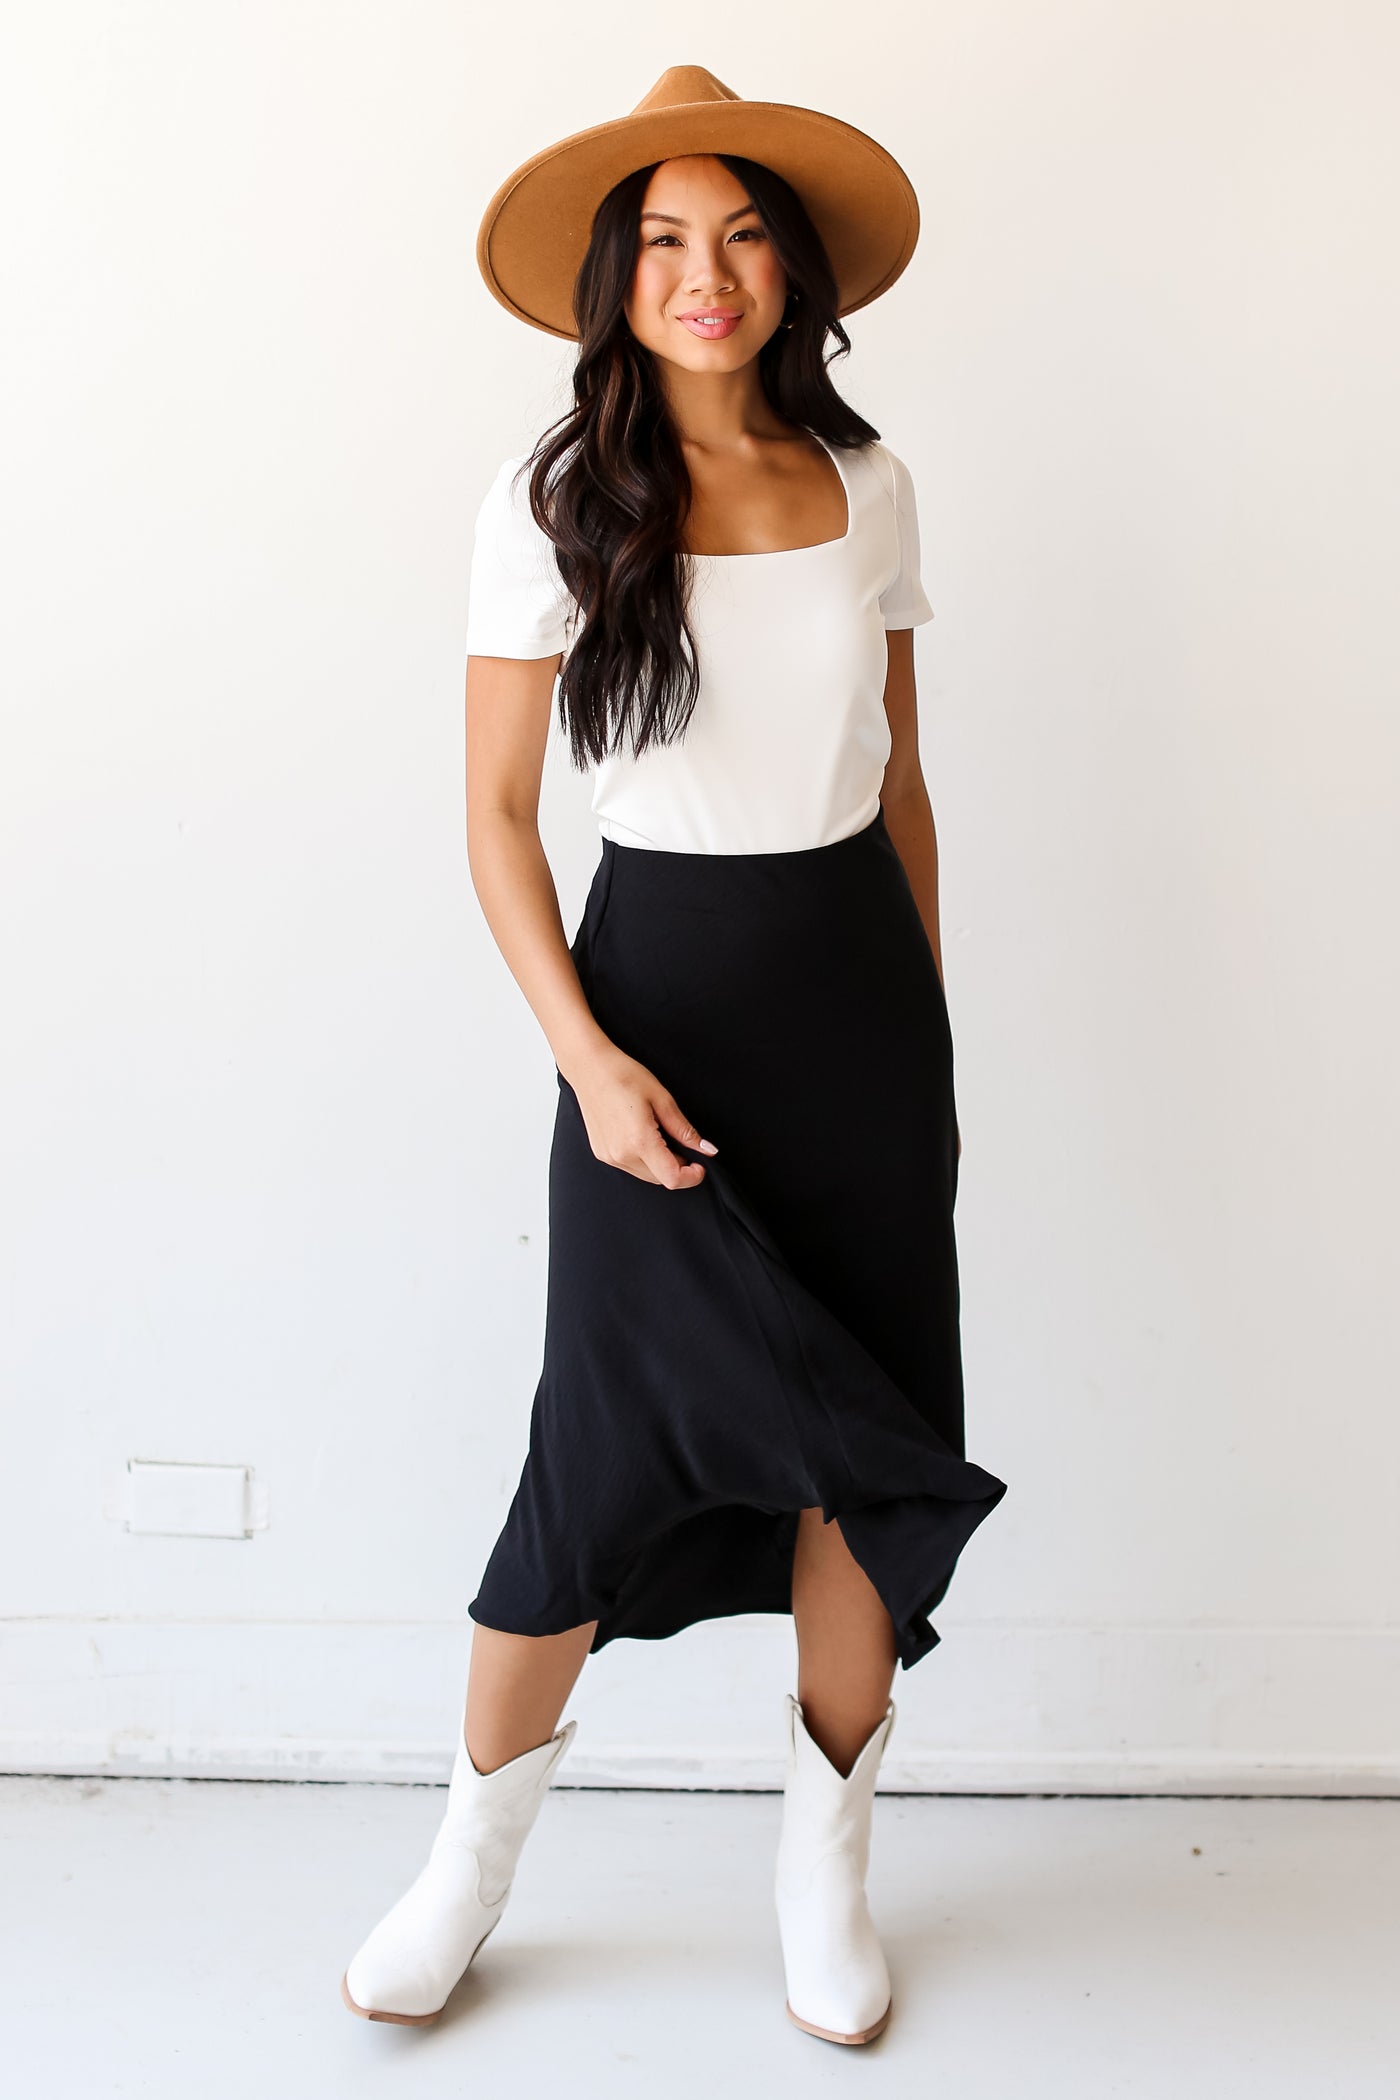 dress up model wearing a black Midi Skirt